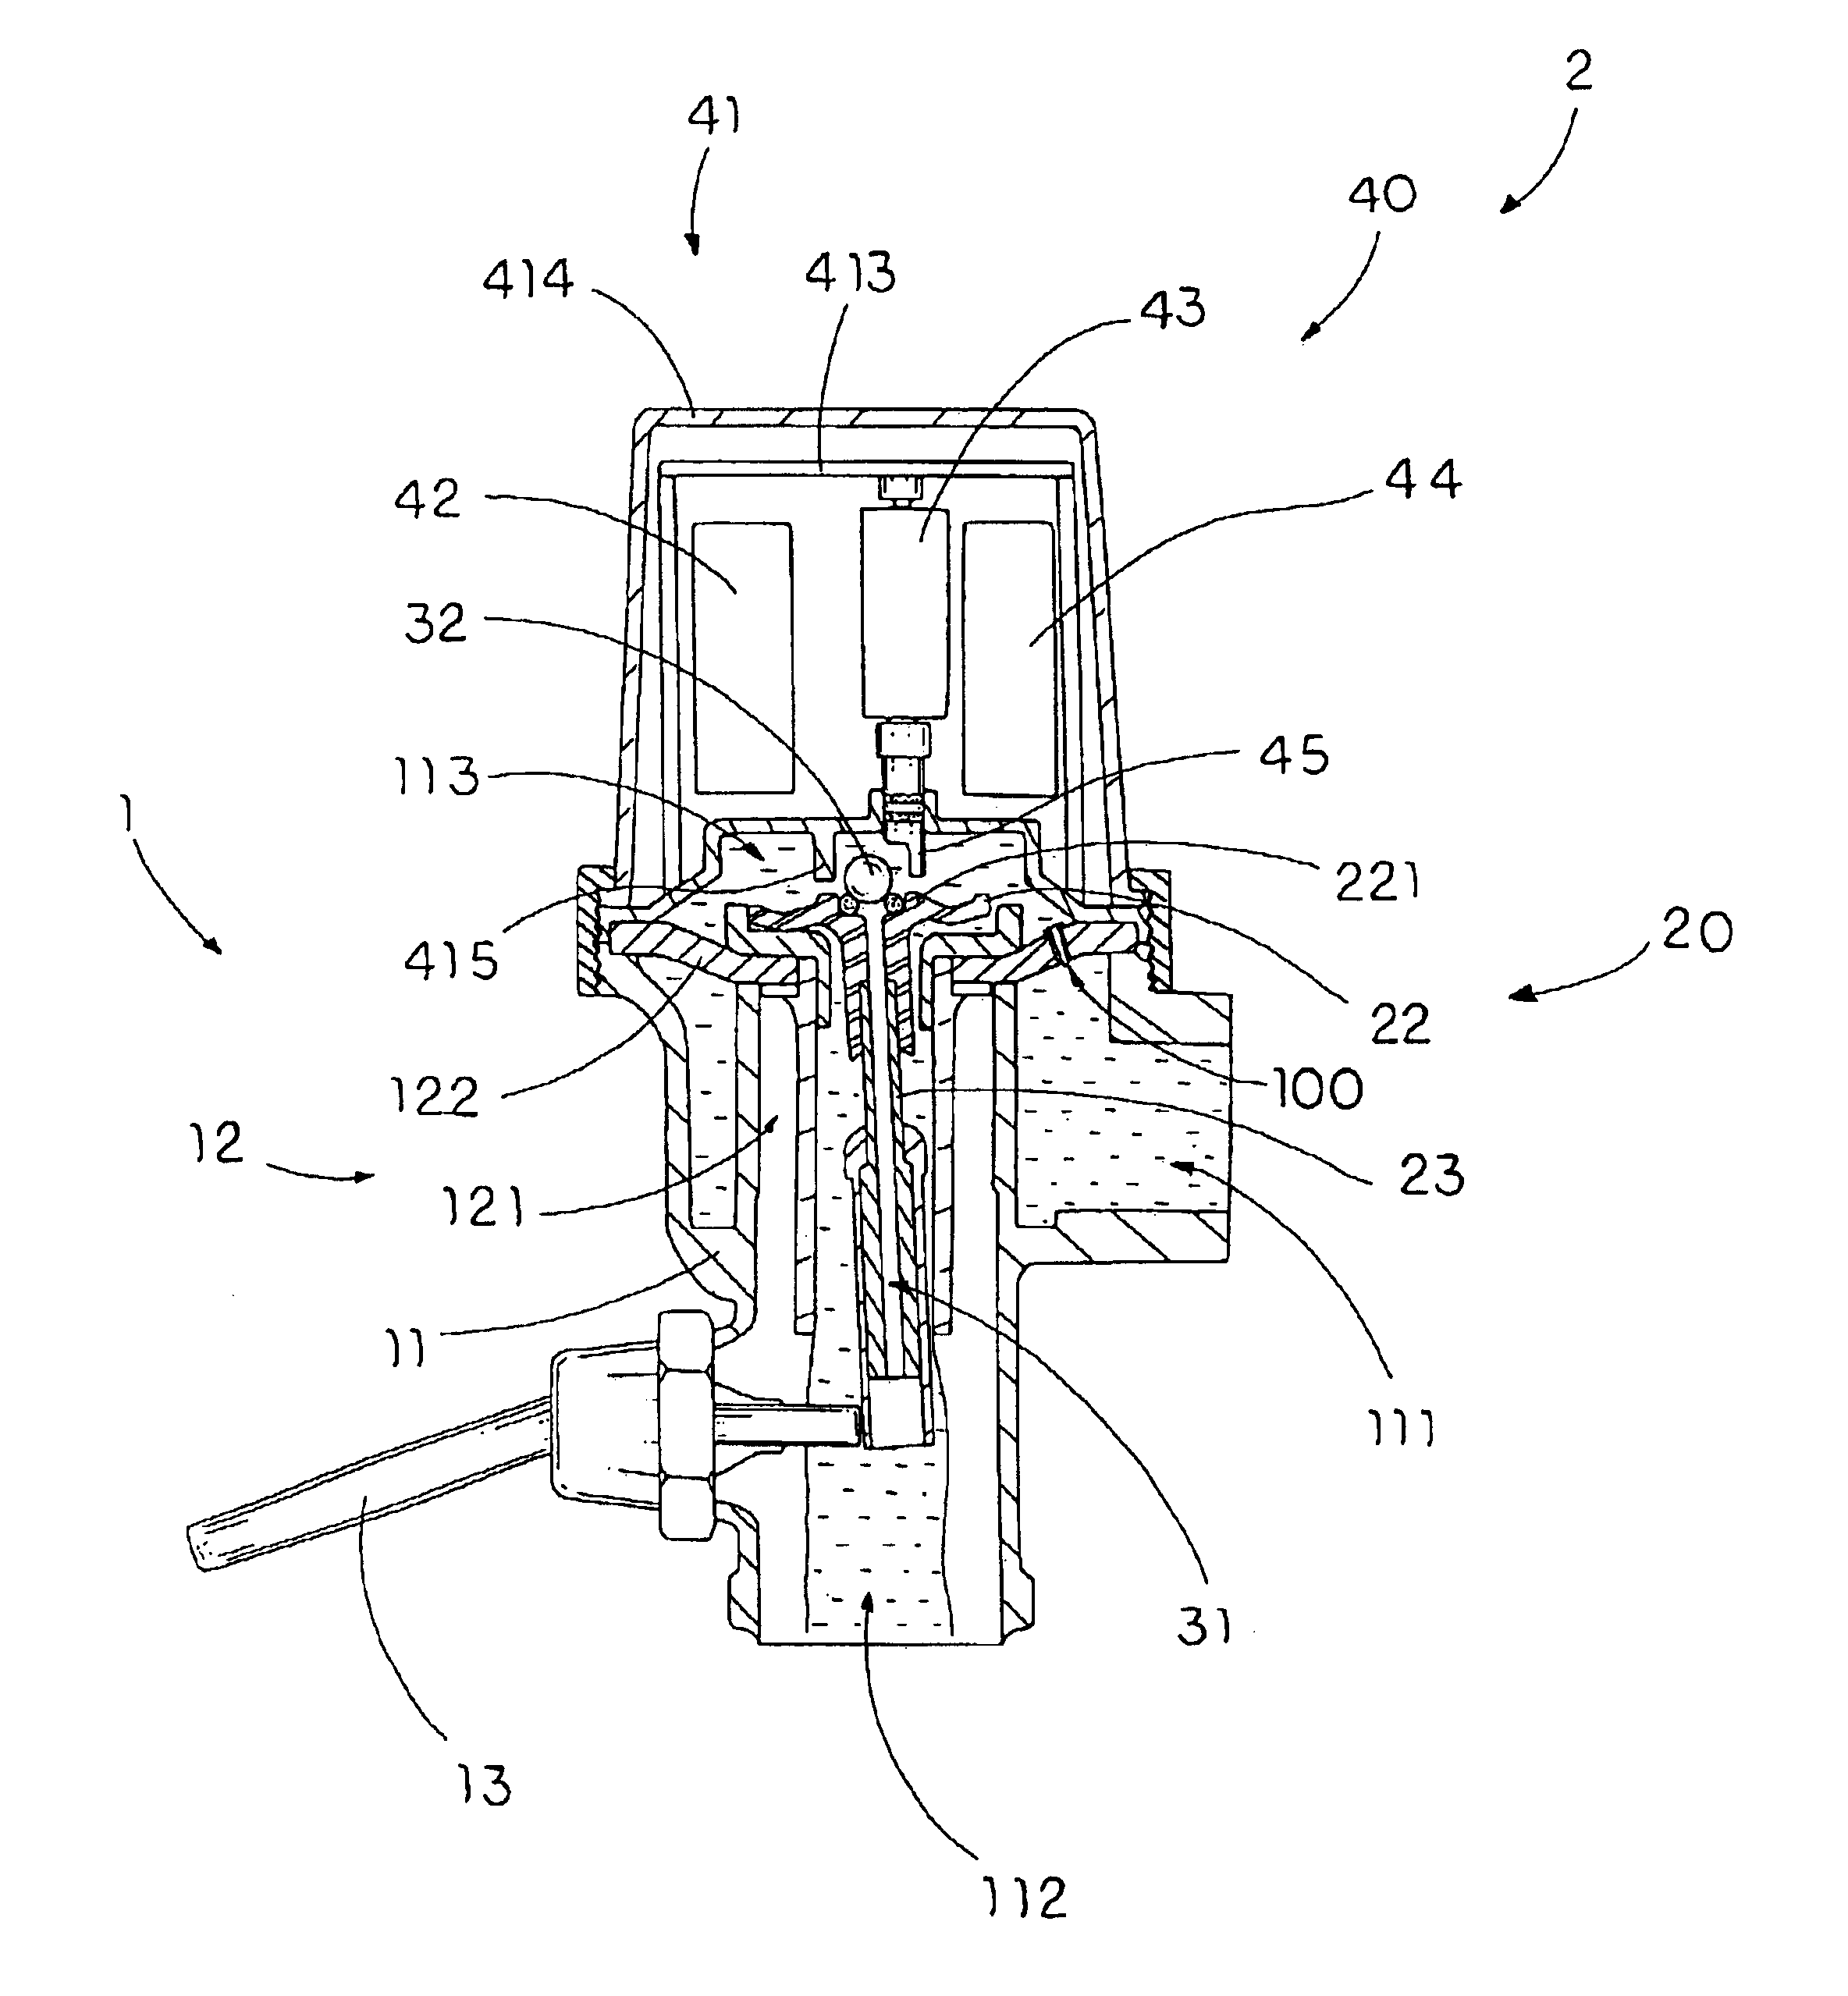 Automatic flush actuation apparatus